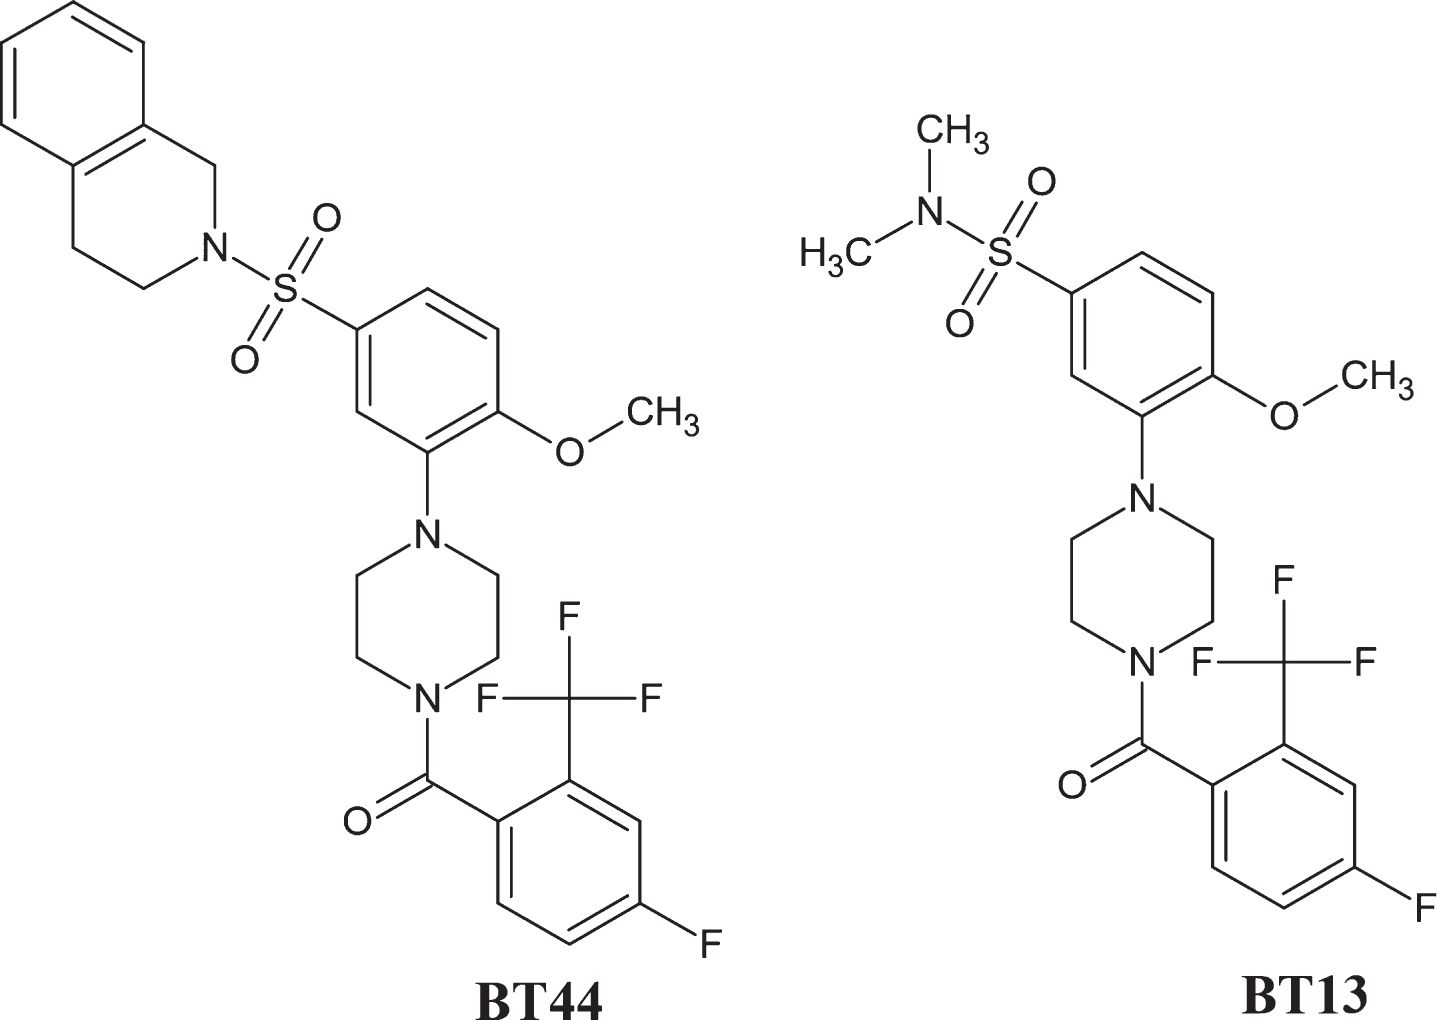 Chemical structure of BT44 ((4-5-((3,4-dihydroisoquinolin-2(1H)-yl)sulfonyl)-2-methoxyphenyl)piperazin-1-yl(4-fluoro-2-(trifluoromethyl)phenyl)methanone) and BT13.